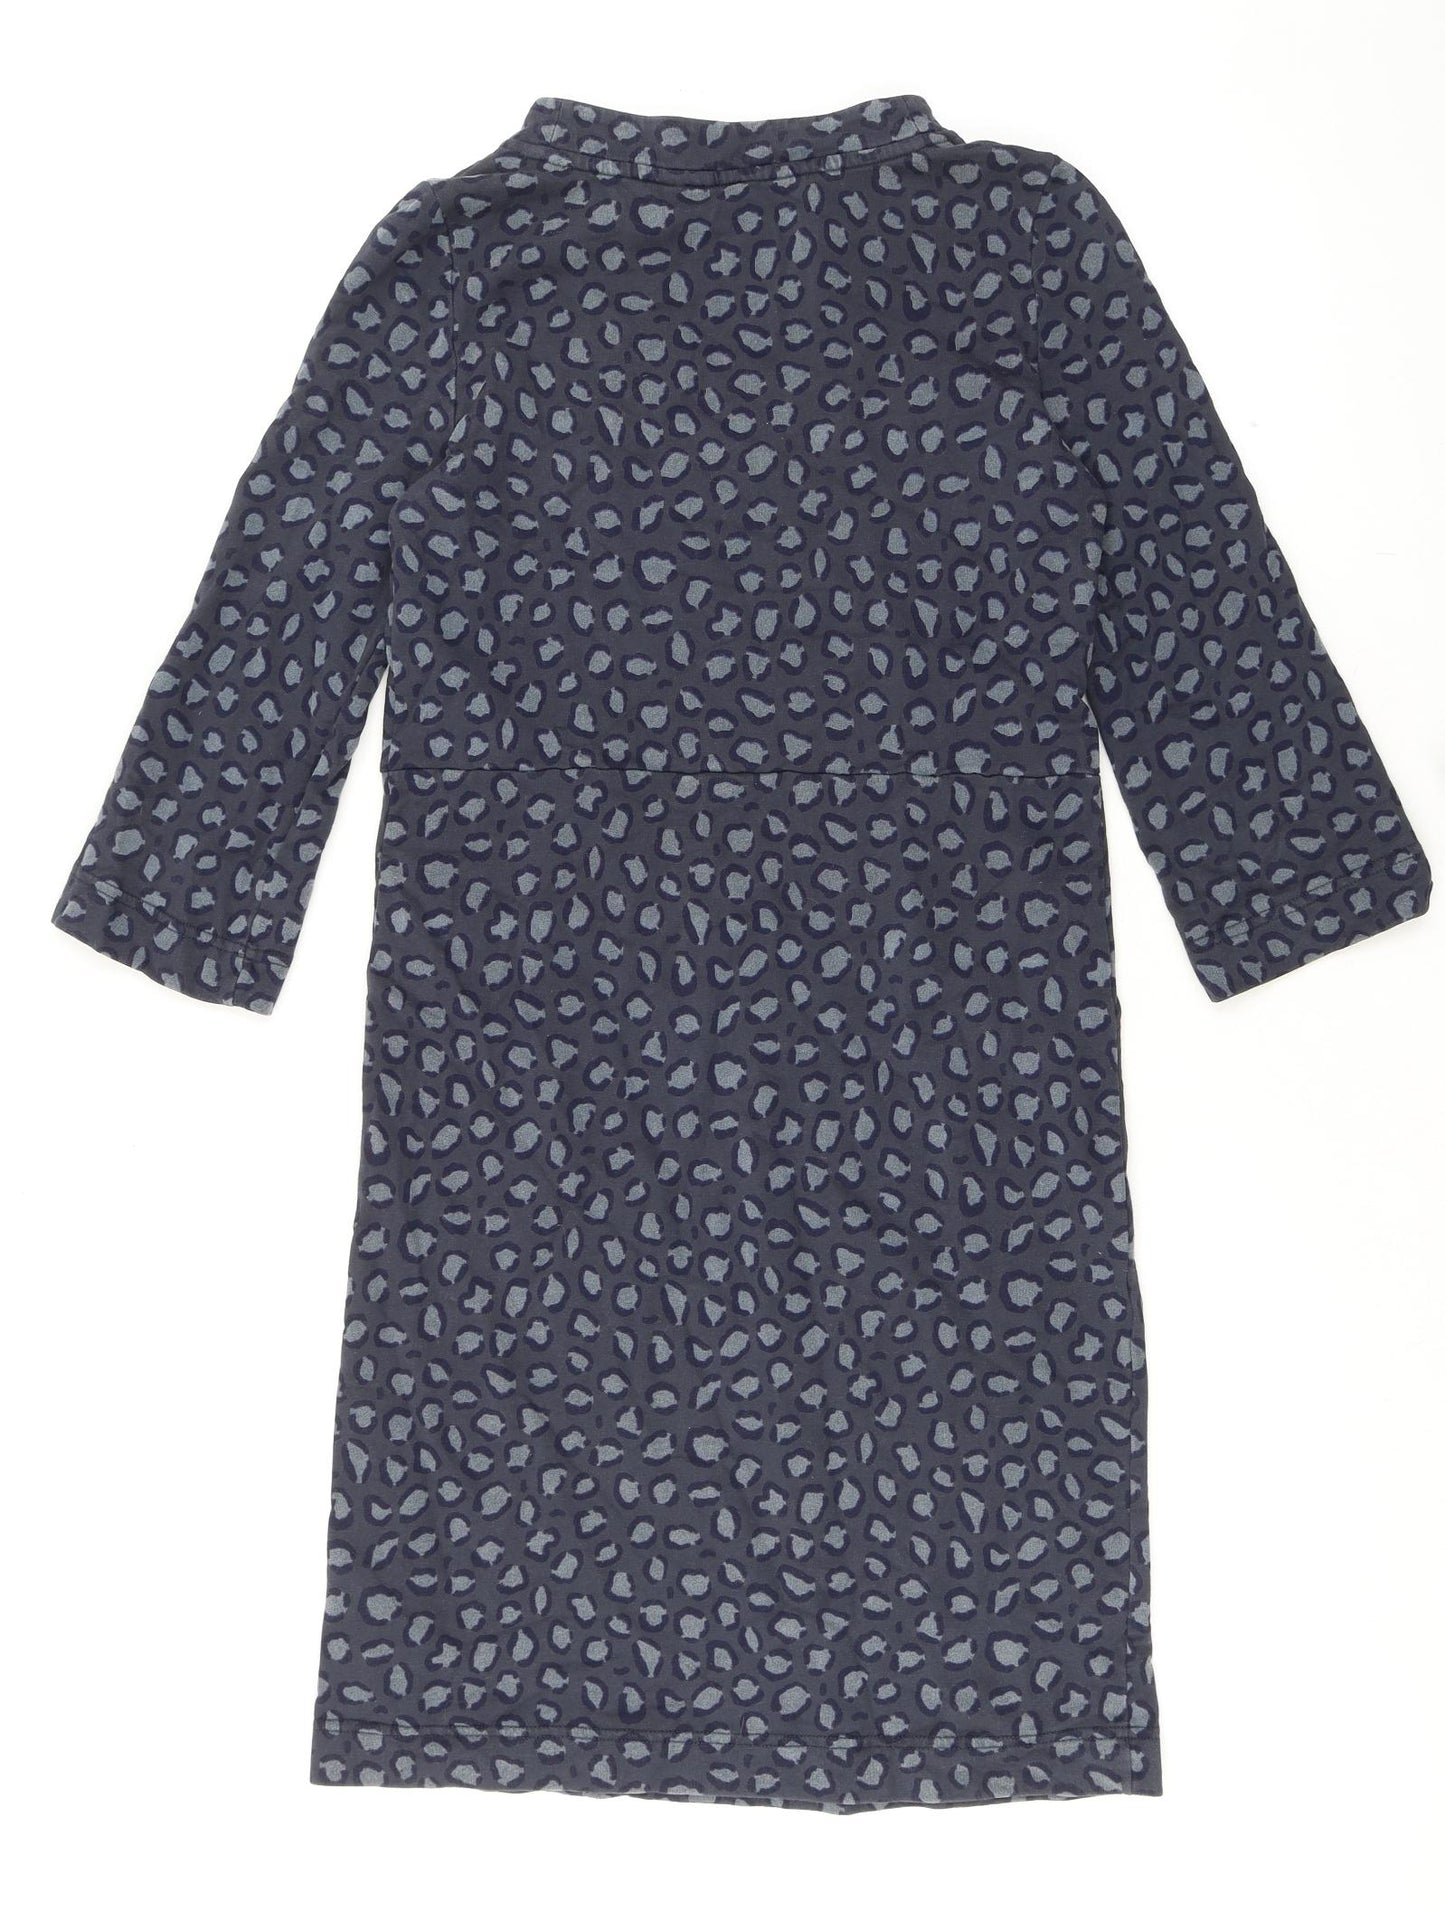 Boden Womens Blue Floral 100% Cotton Jumper Dress Size 8 Boat Neck Pullover